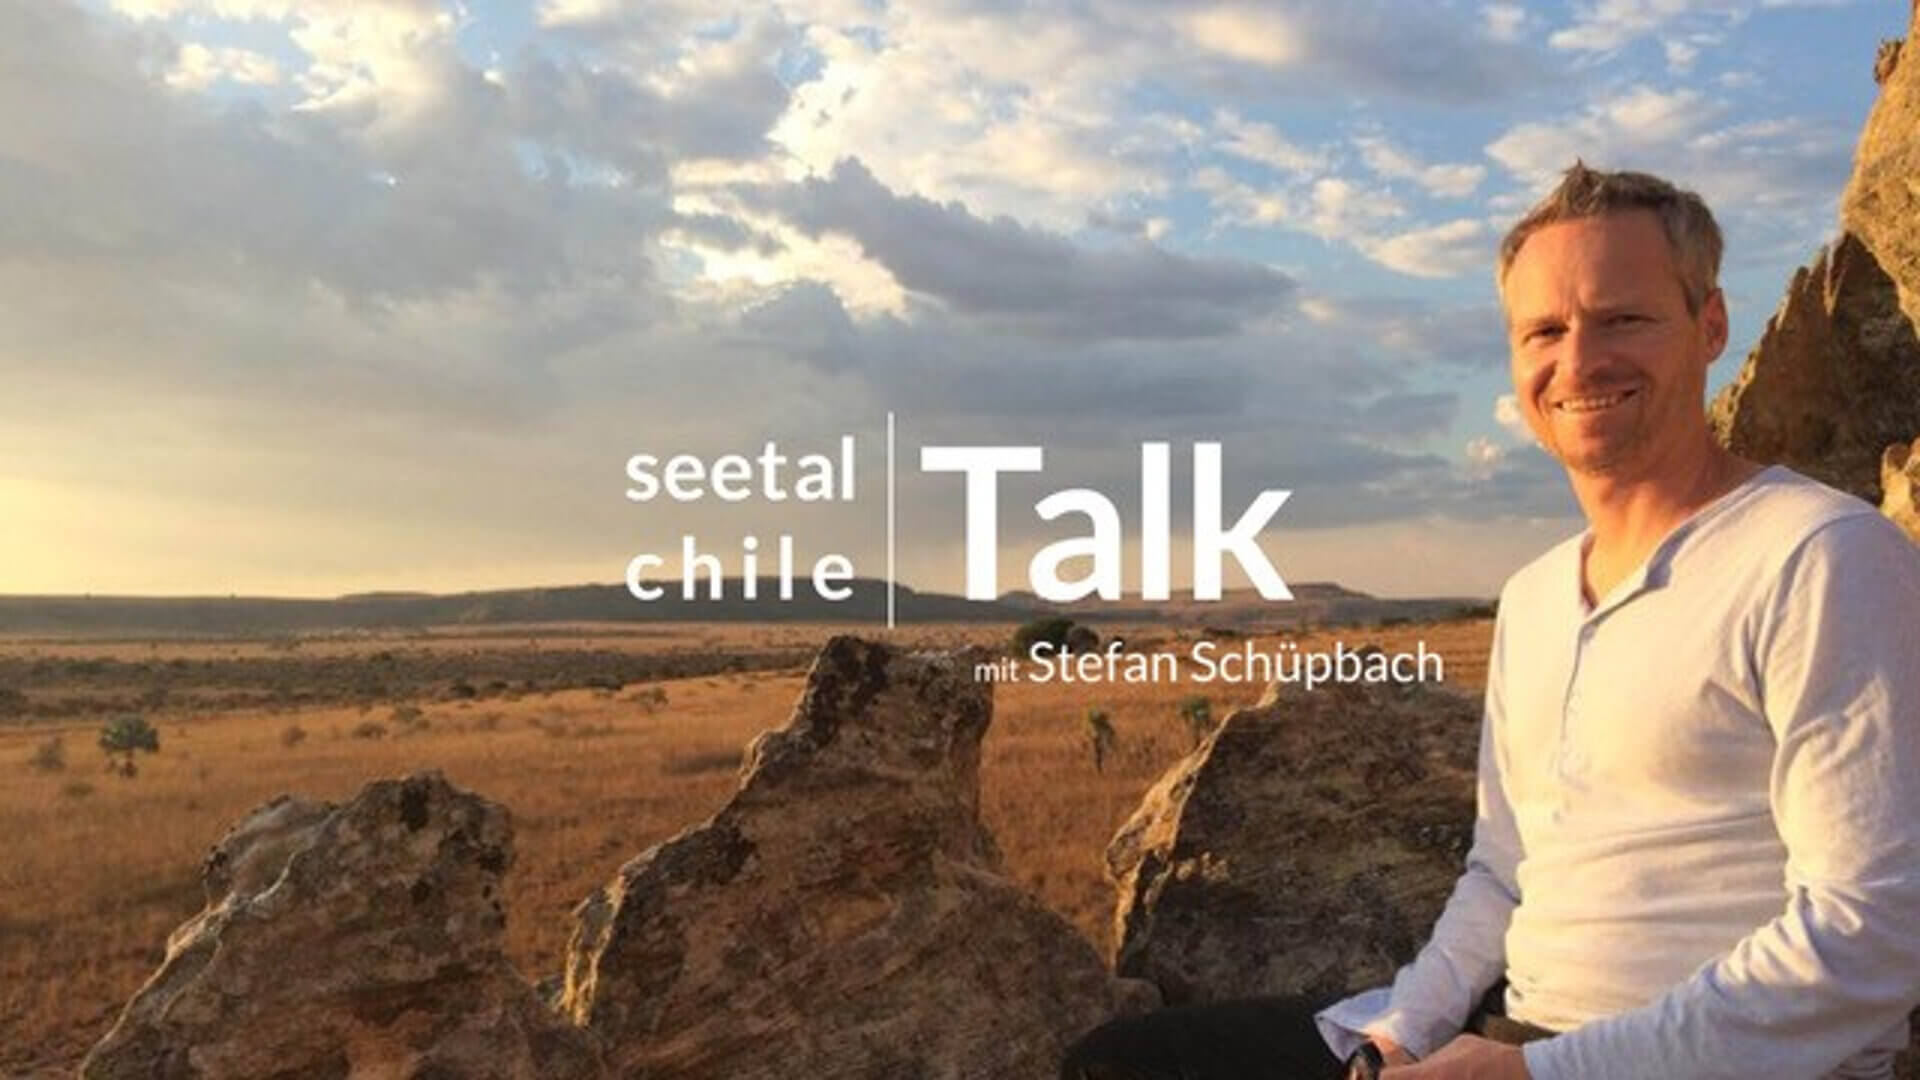 seetal chile Talk1